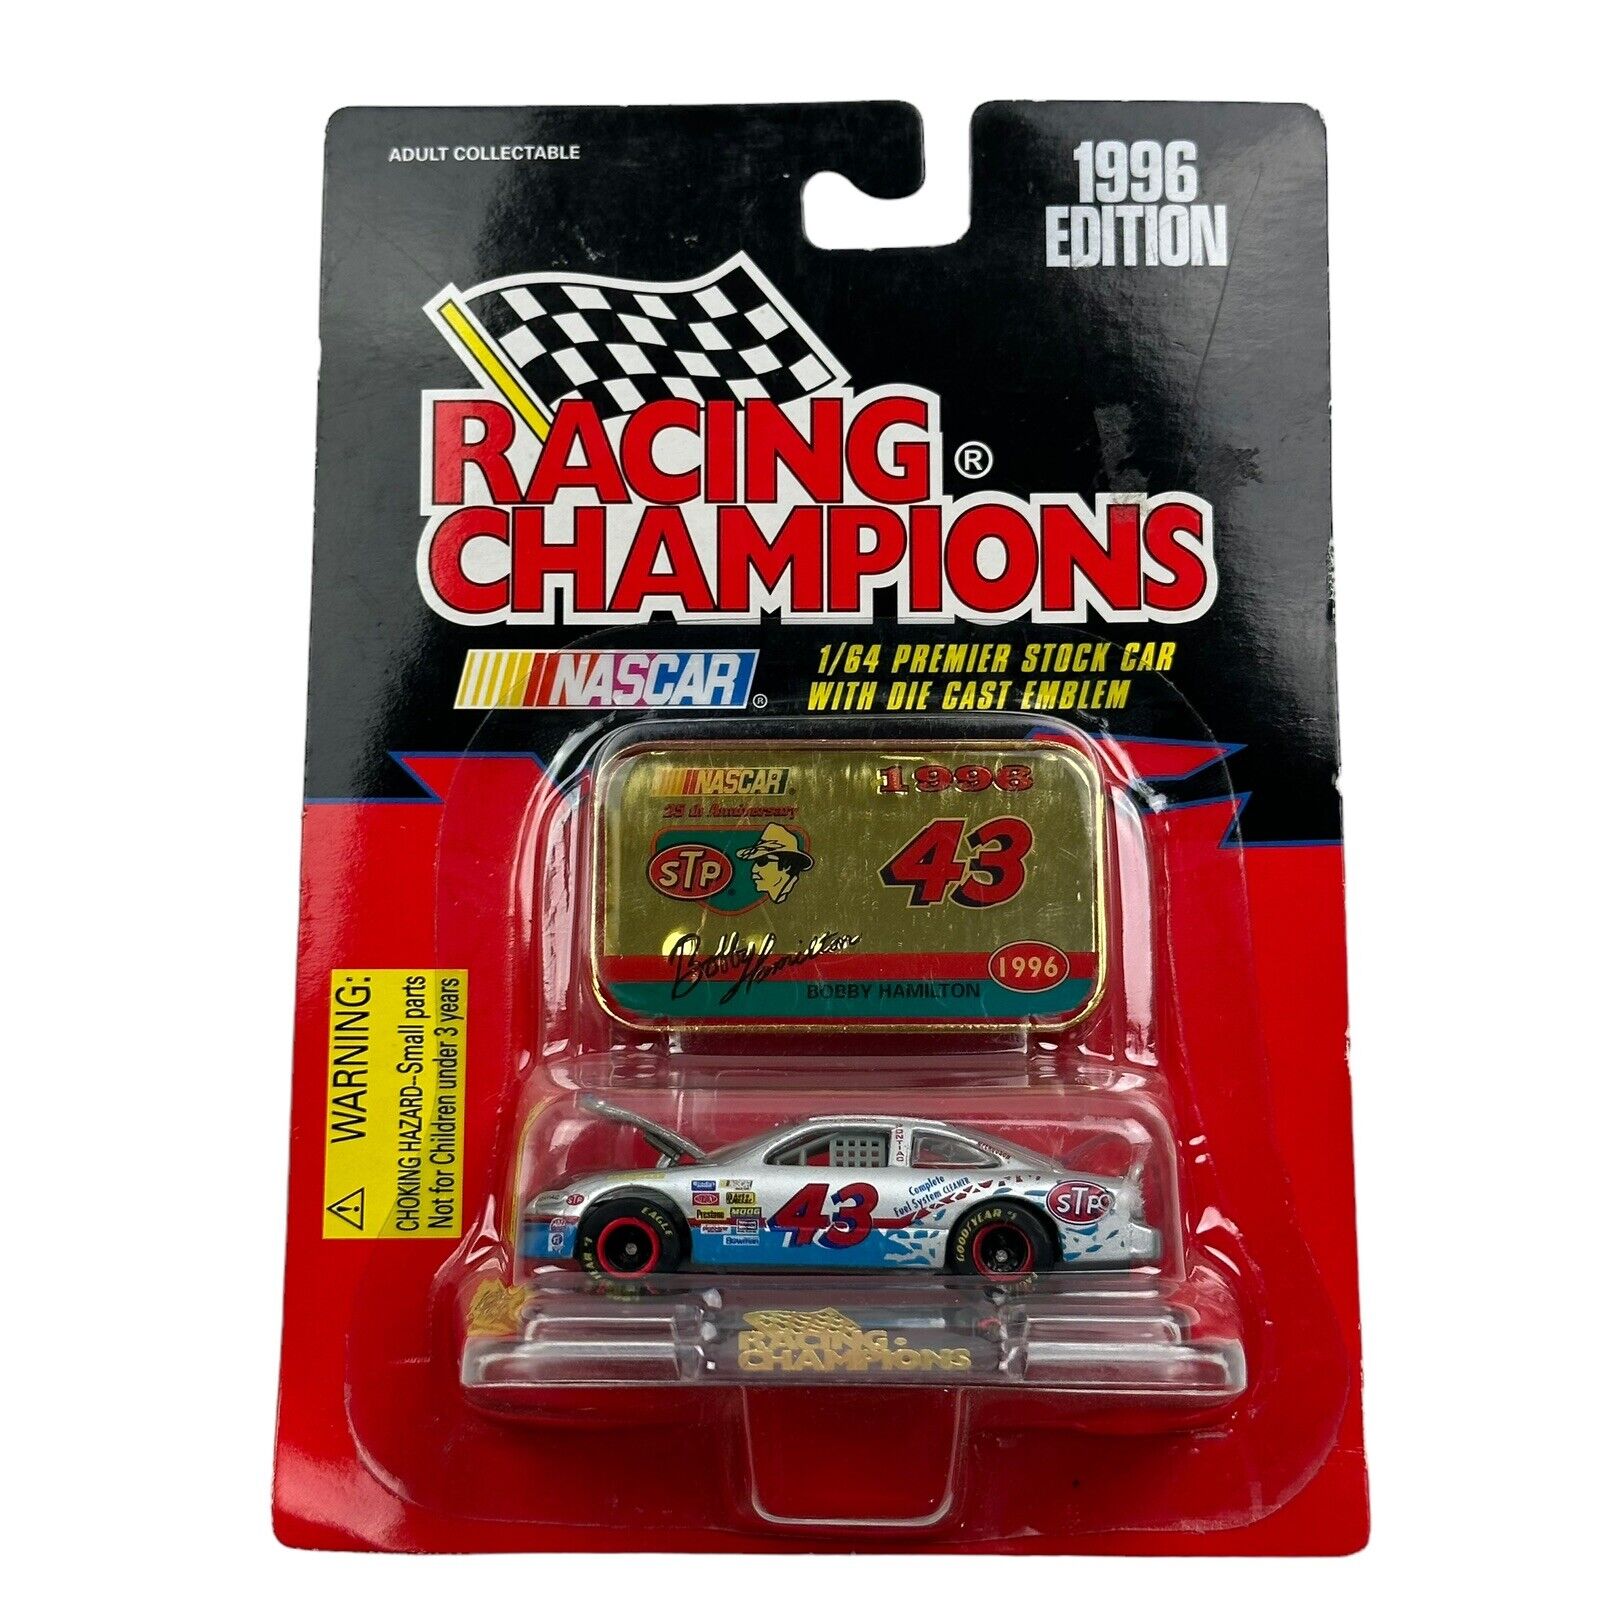 Racing Champions Nascar 1996 Bobby Hamilton Petty STP #43 1/64 Die Cast Car HO